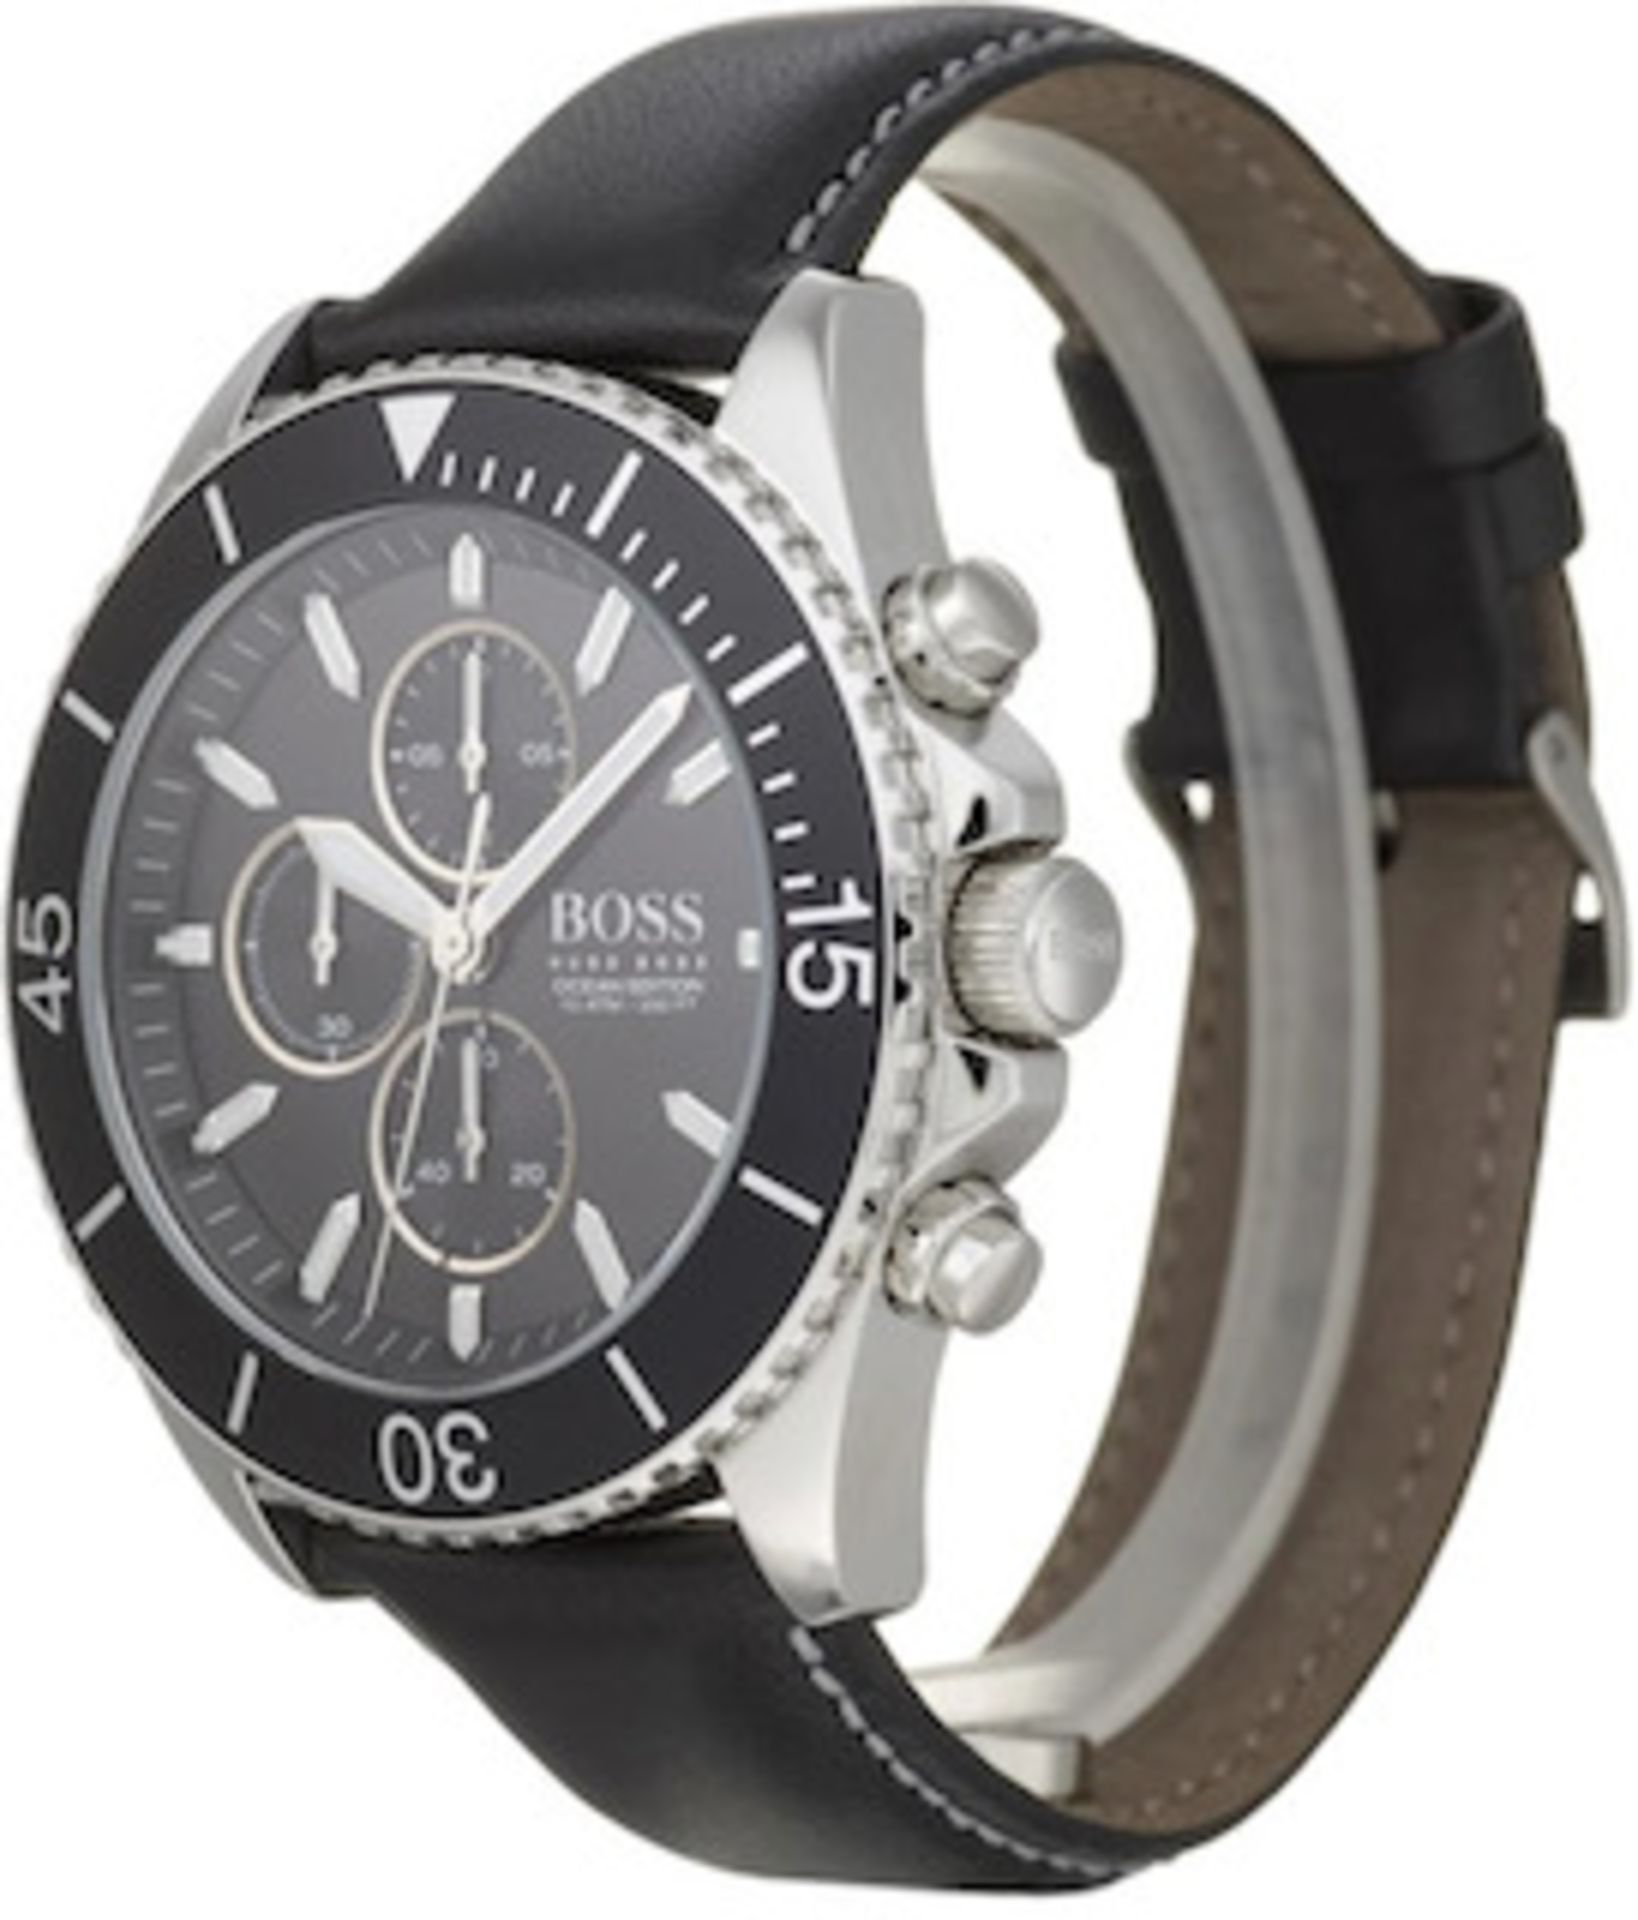 Hugo Boss 1513697 Men's Ocean Edition Black Leather Strap Chronograph Watch - Image 4 of 5